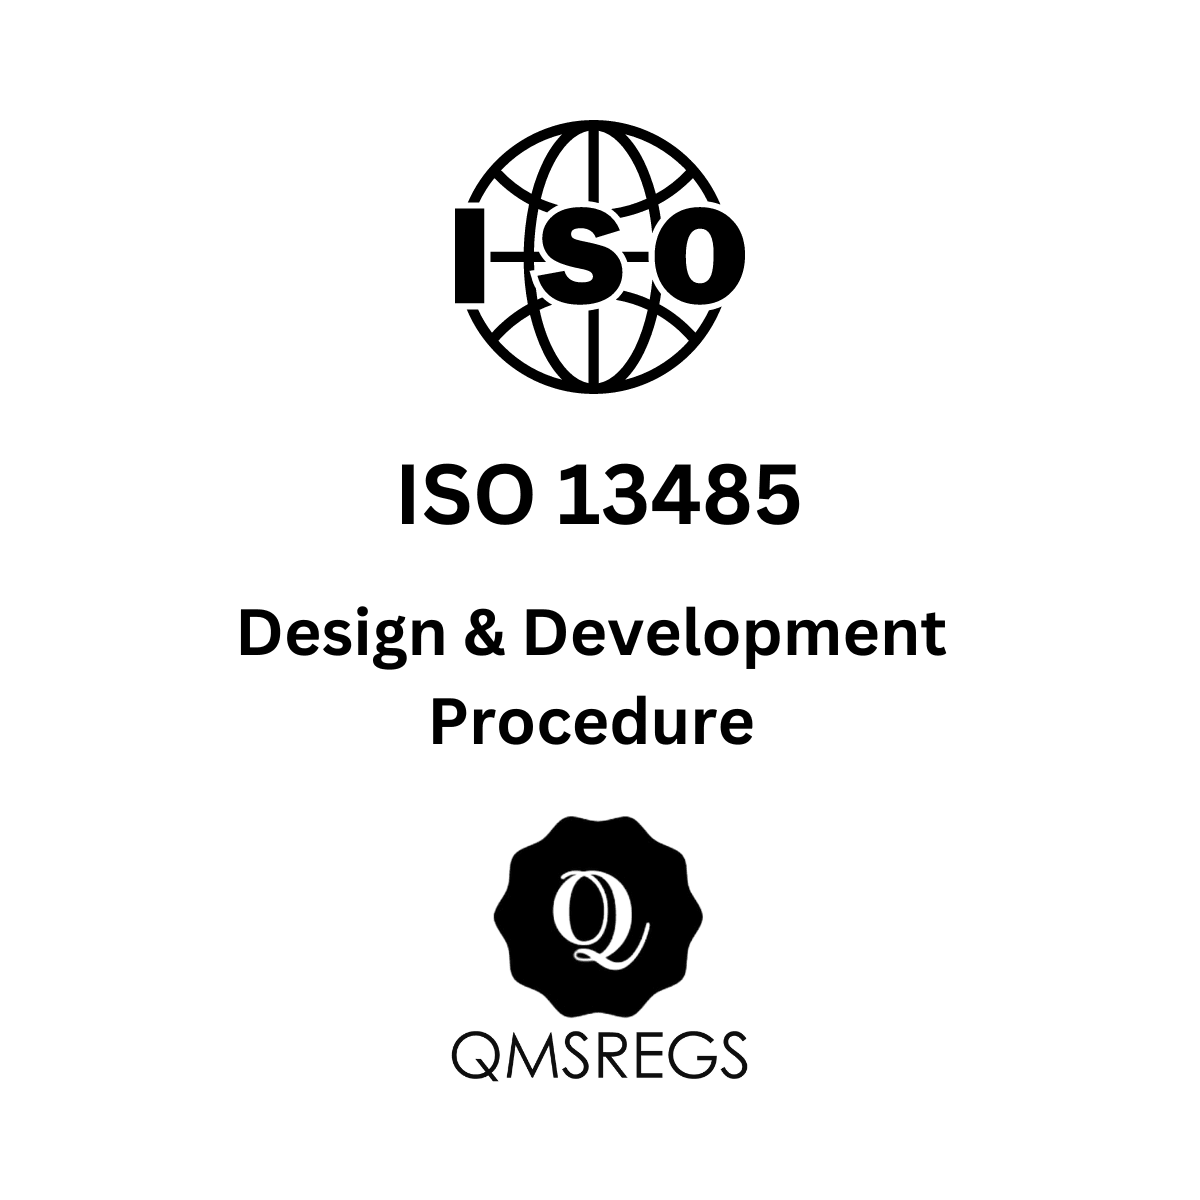 ISO 13485 Design and Development Procedure Template